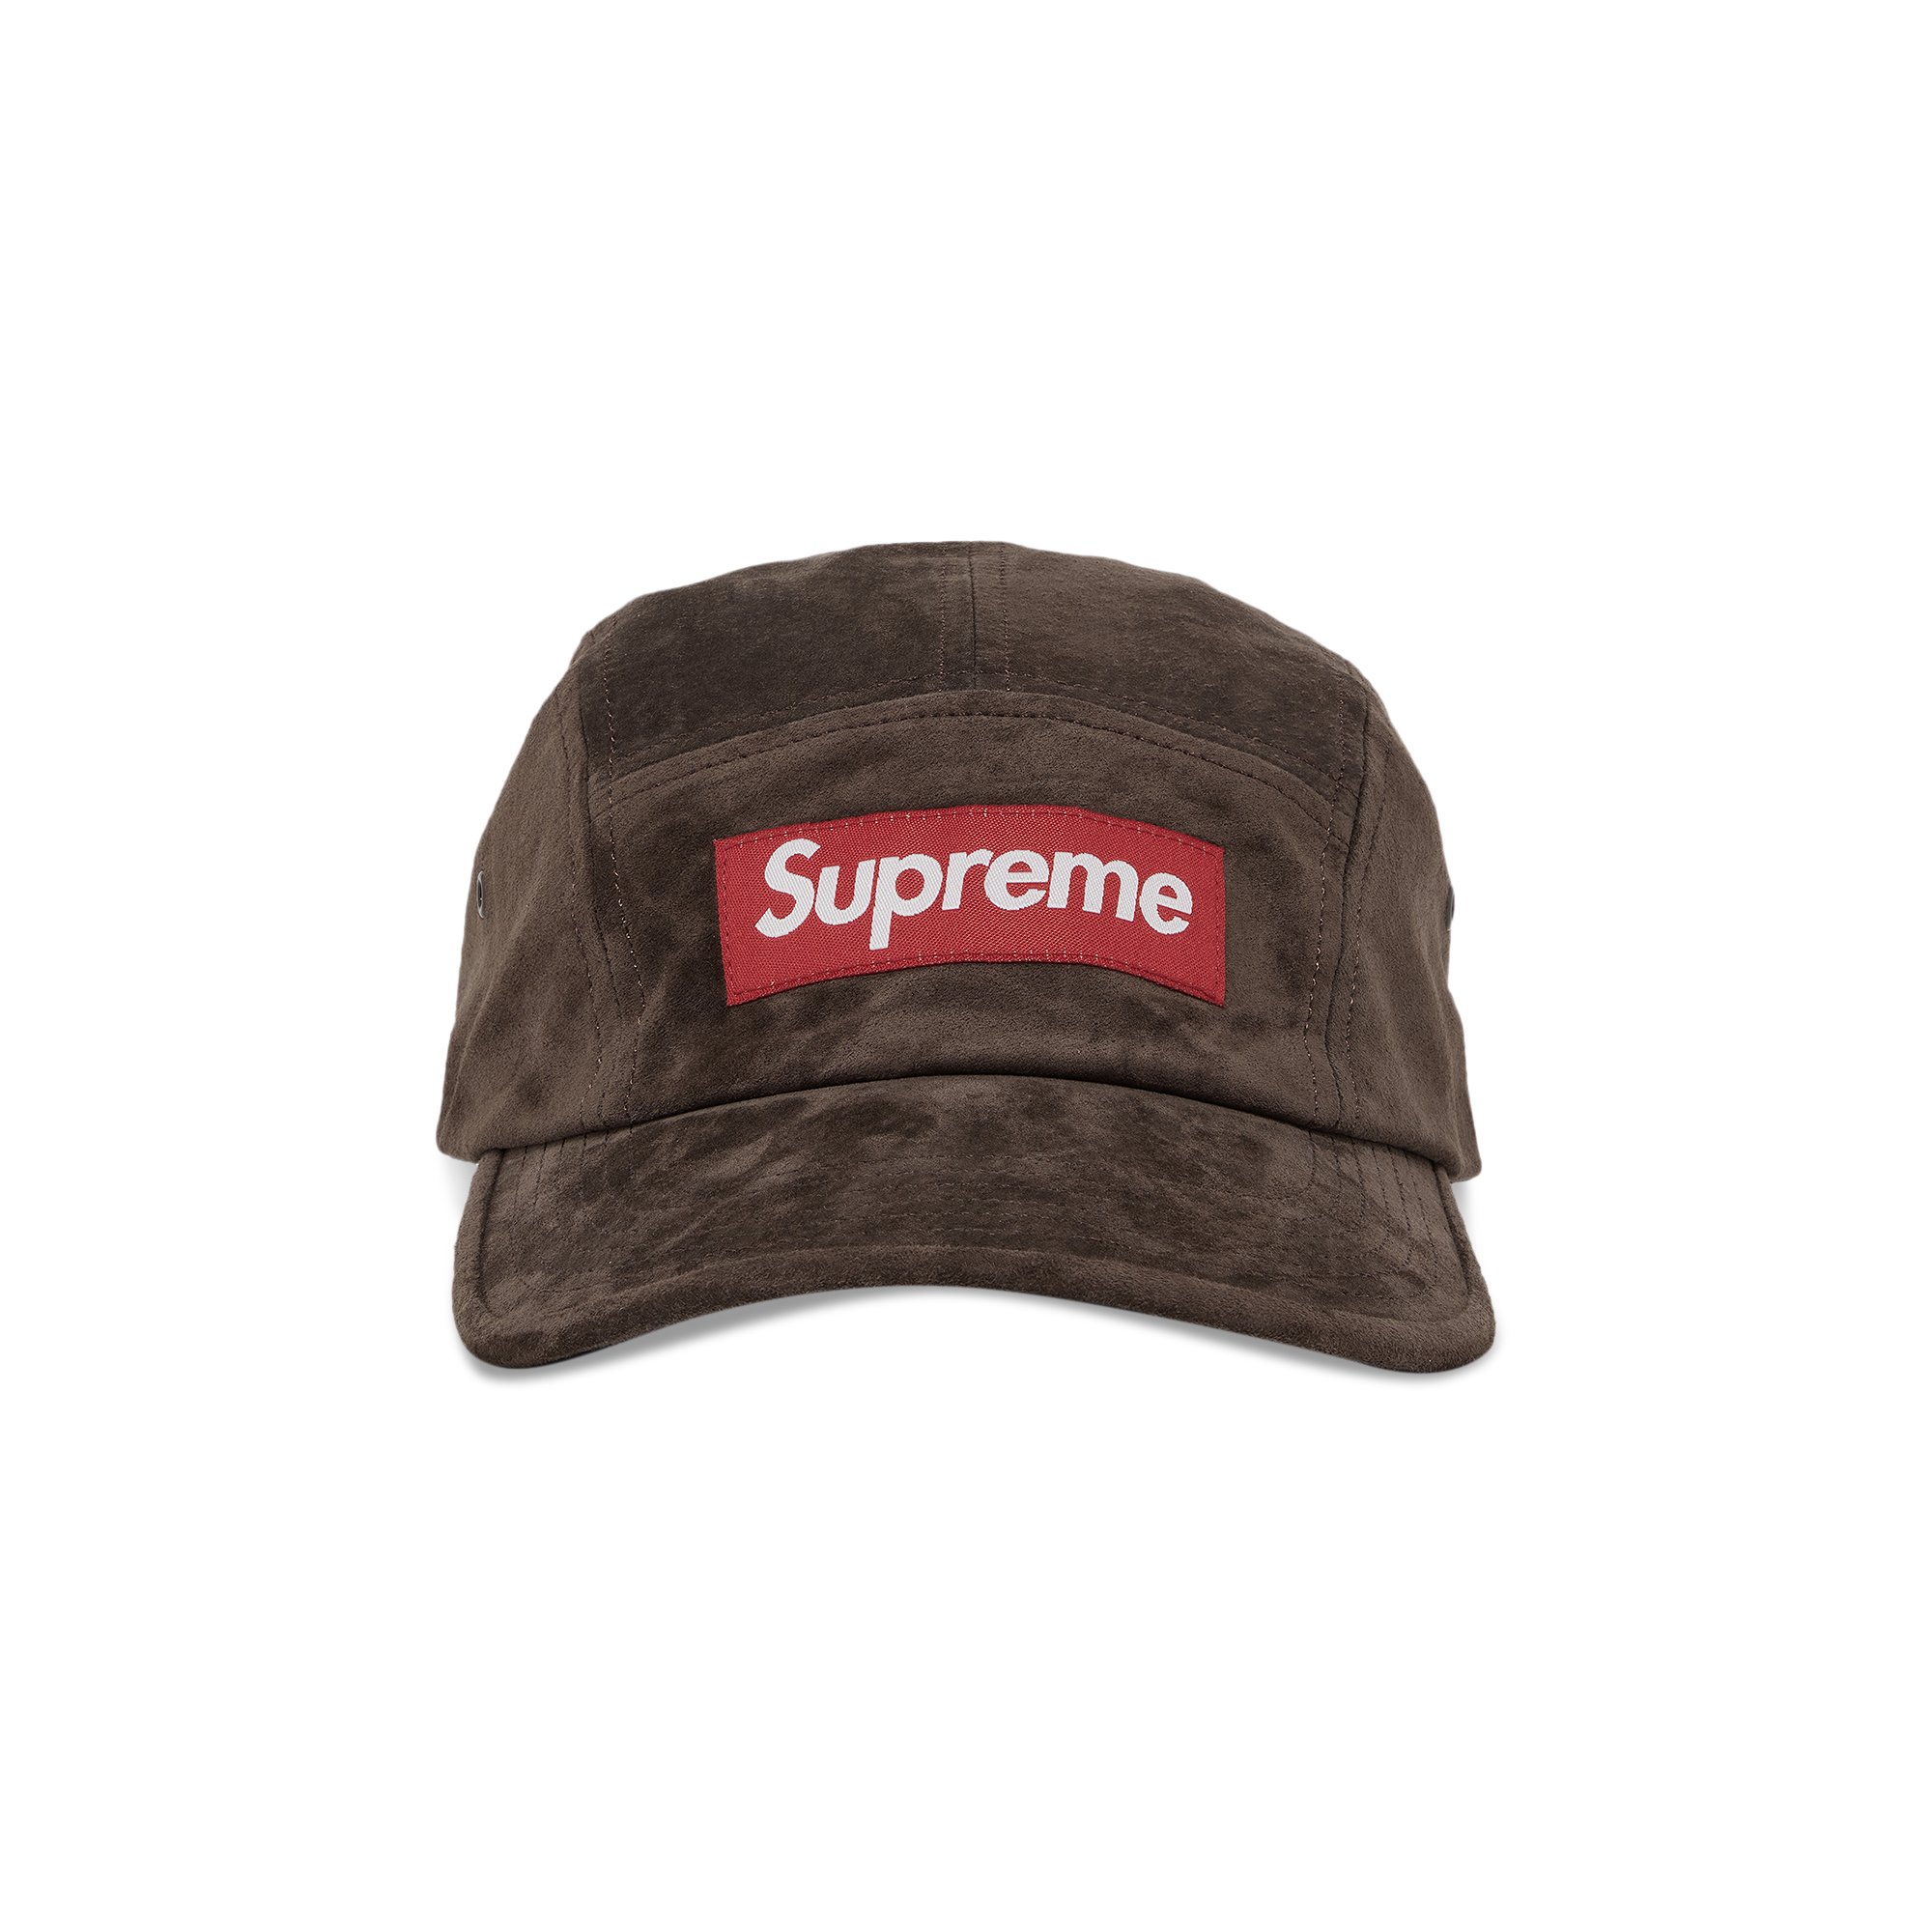 Замшевая кепка Supreme, коричневая серо коричневая замшевая куртка на кнопках frye тауп